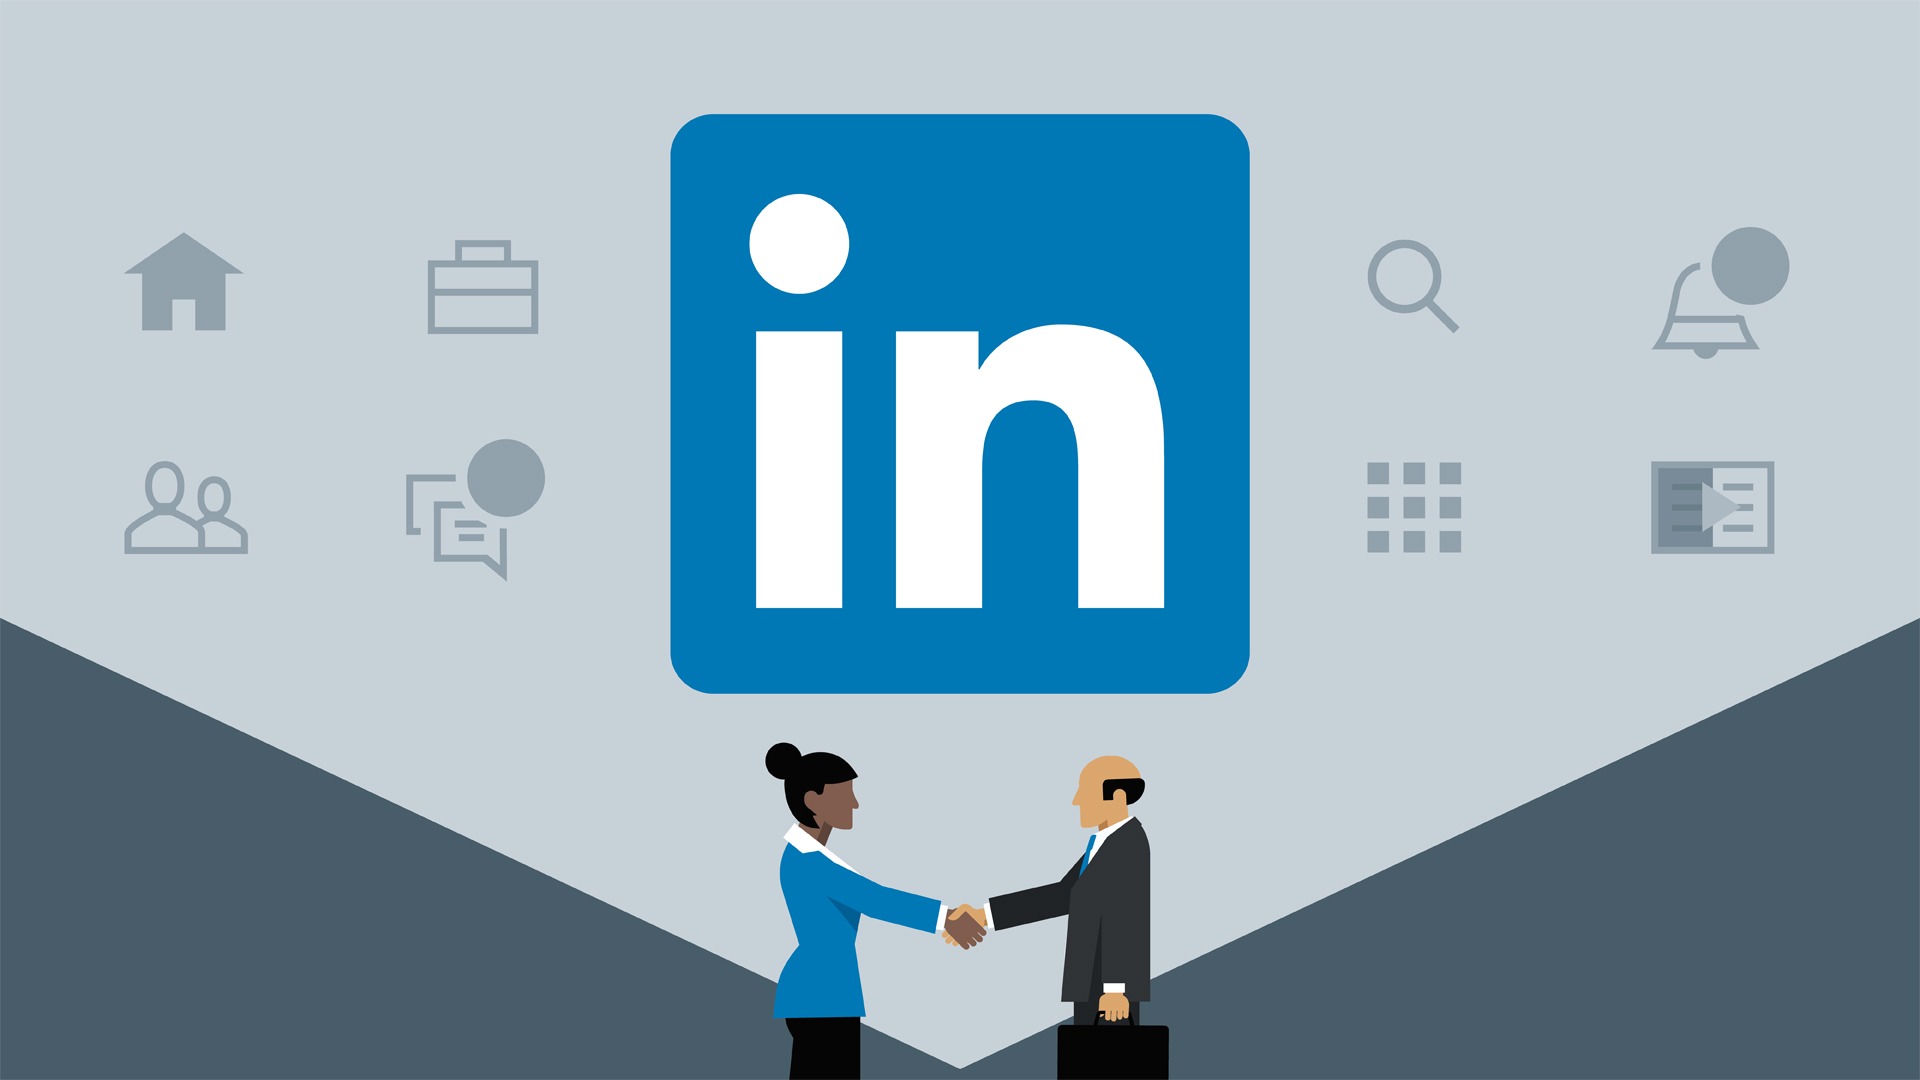 LinkedIn_Marketing